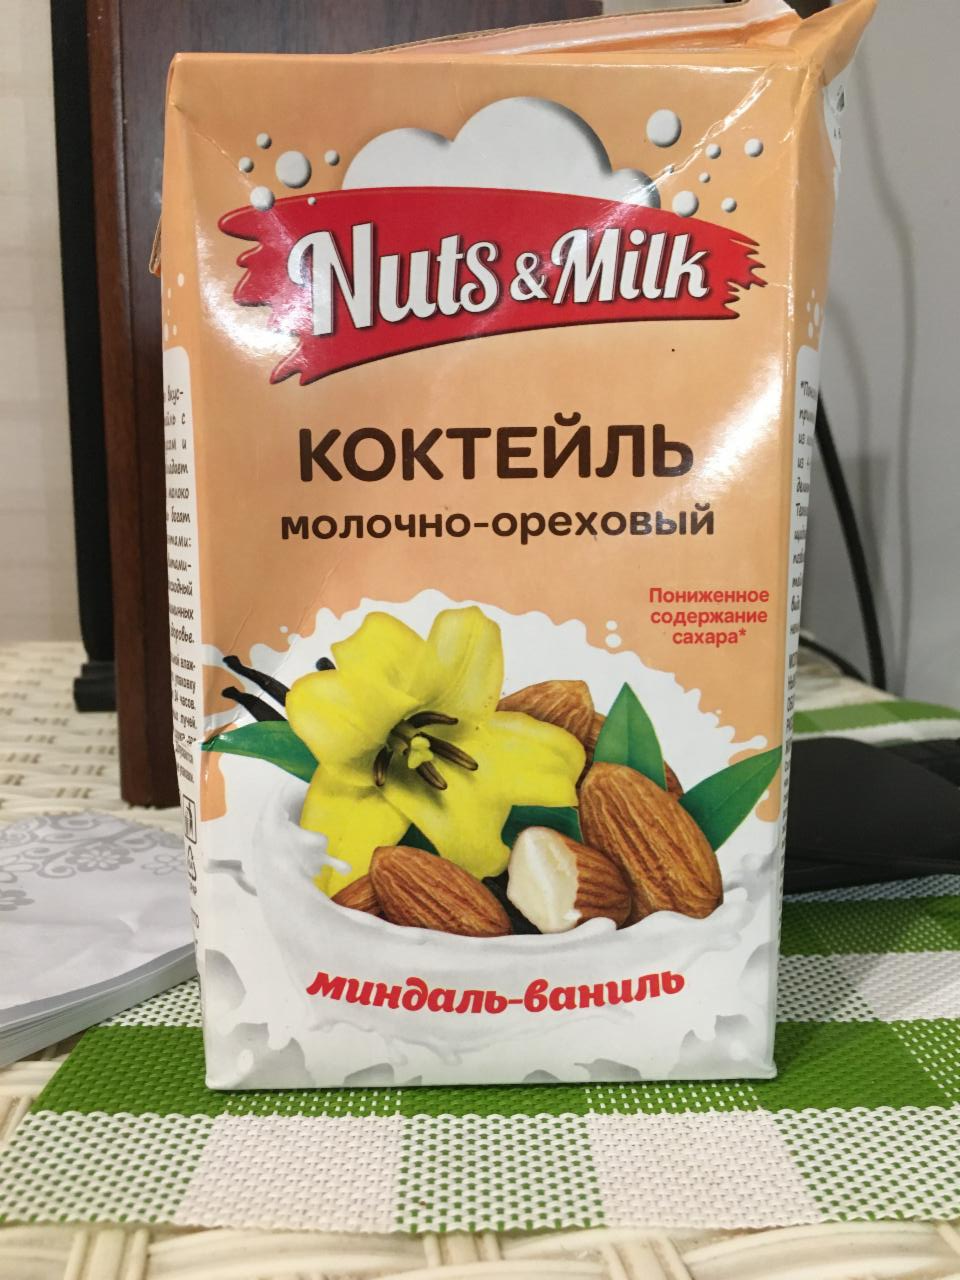 Фото - Коктейль молочно-ореховый Nuts & Milk